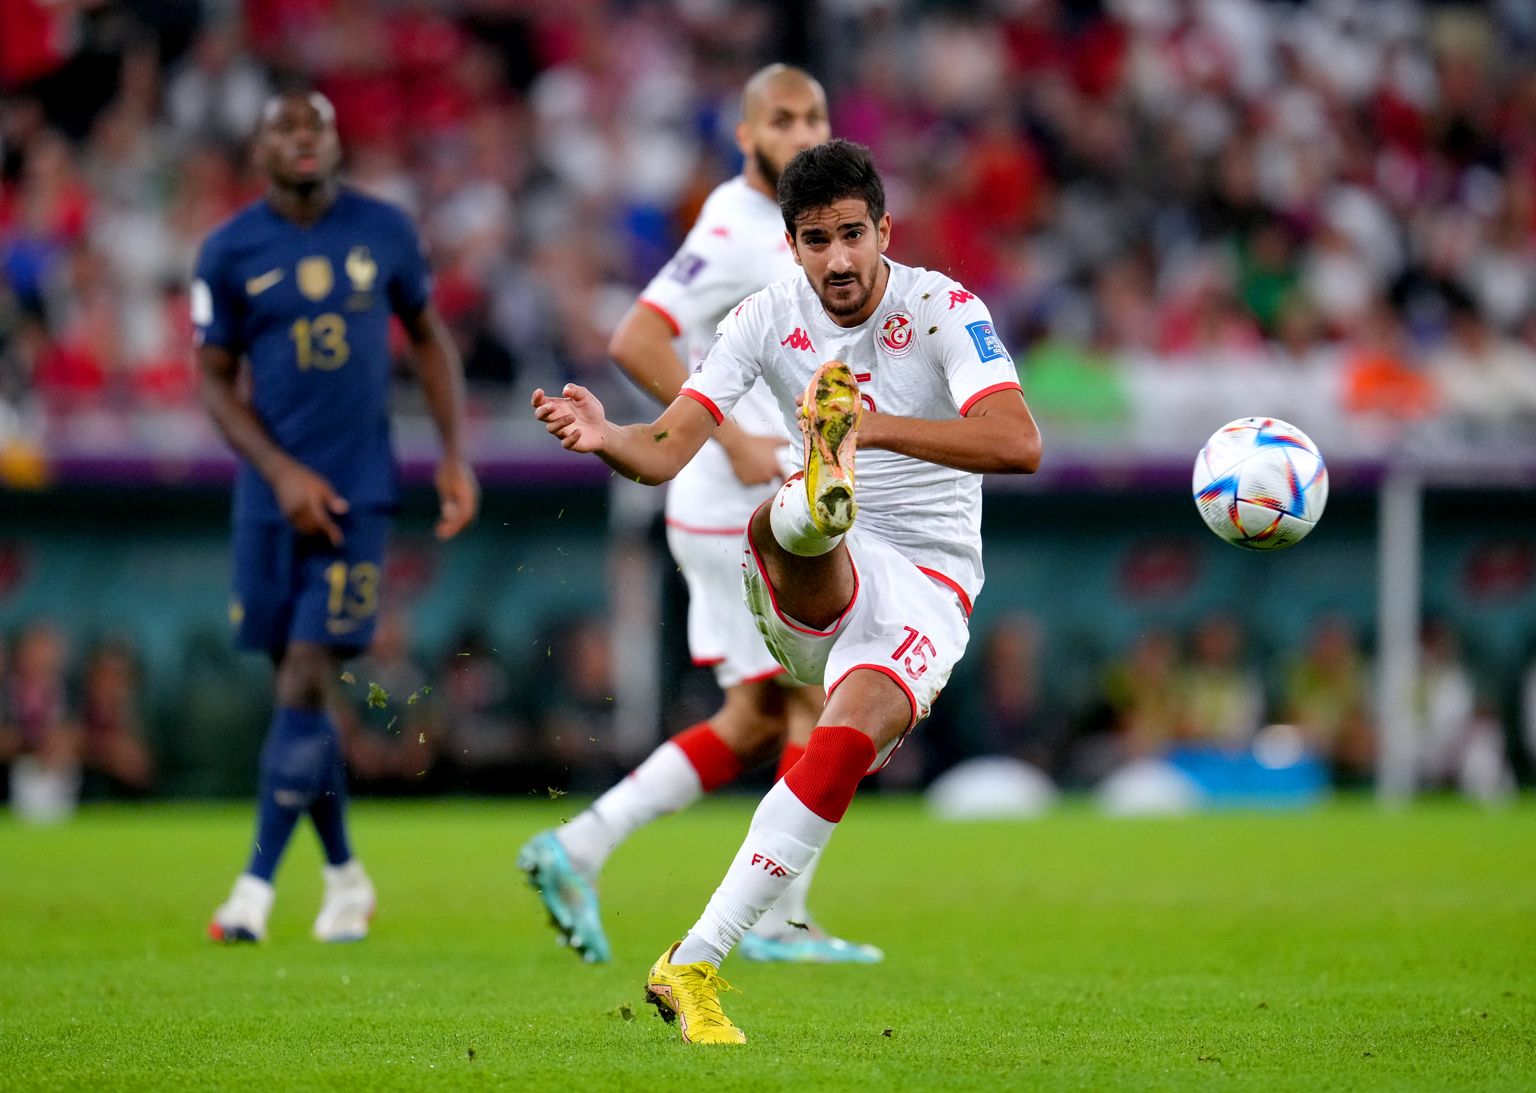 Али бен Ромдан посылает мяч в матче Туниса с Францией, ЧМ 2022, Катар.